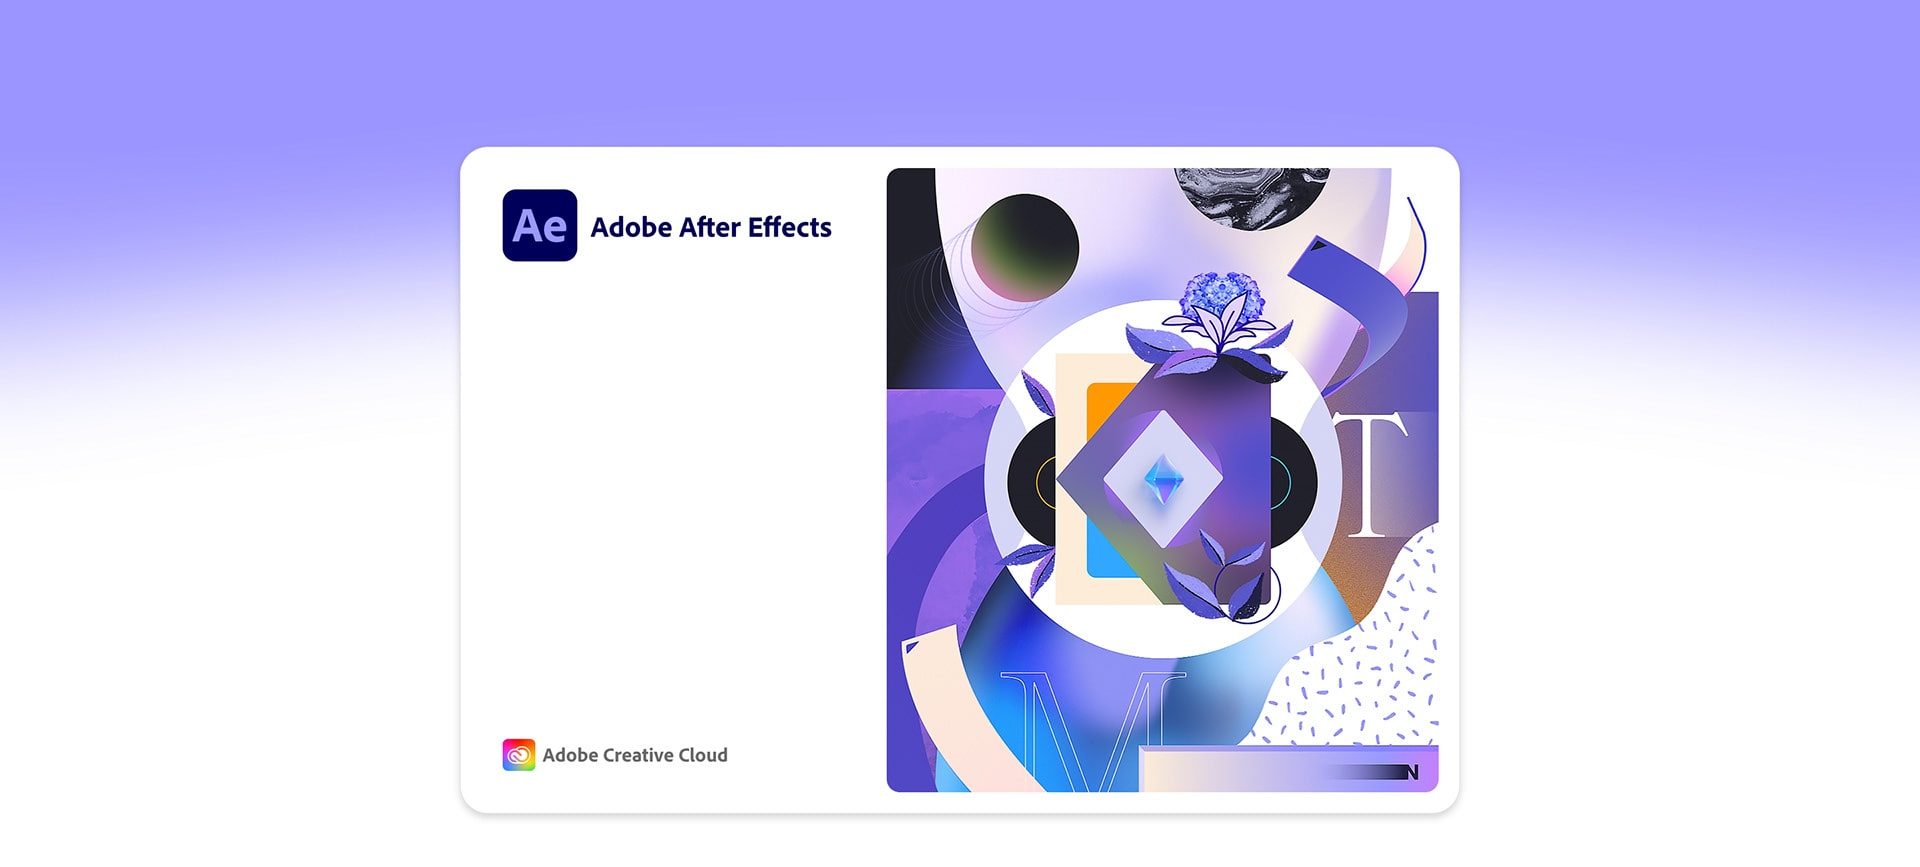 na slici se nalazi logo Adobe after effects-a za uslugu "Instalacija After Effects"